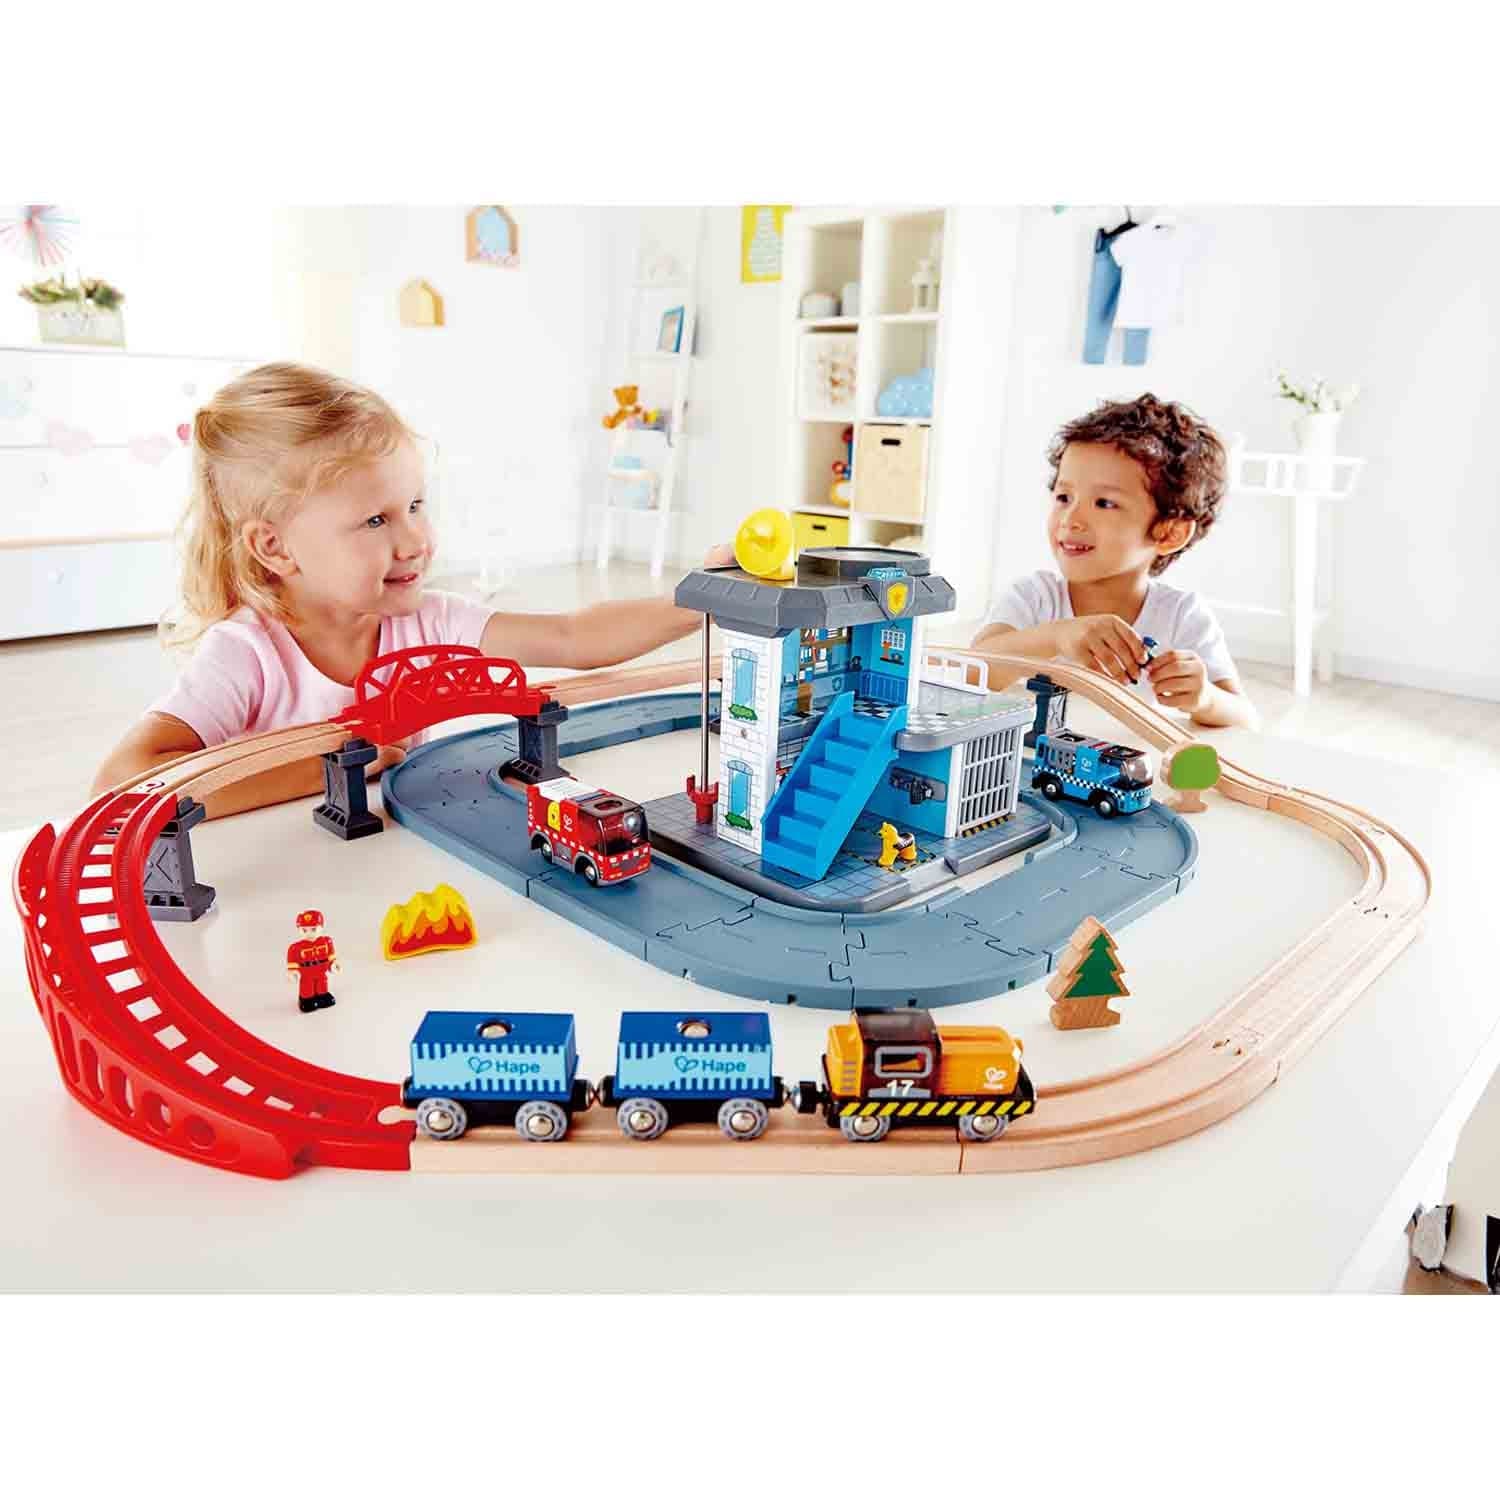 Hape-Emergency Services HQ Railway Train Set-E3736-Legacy Toys